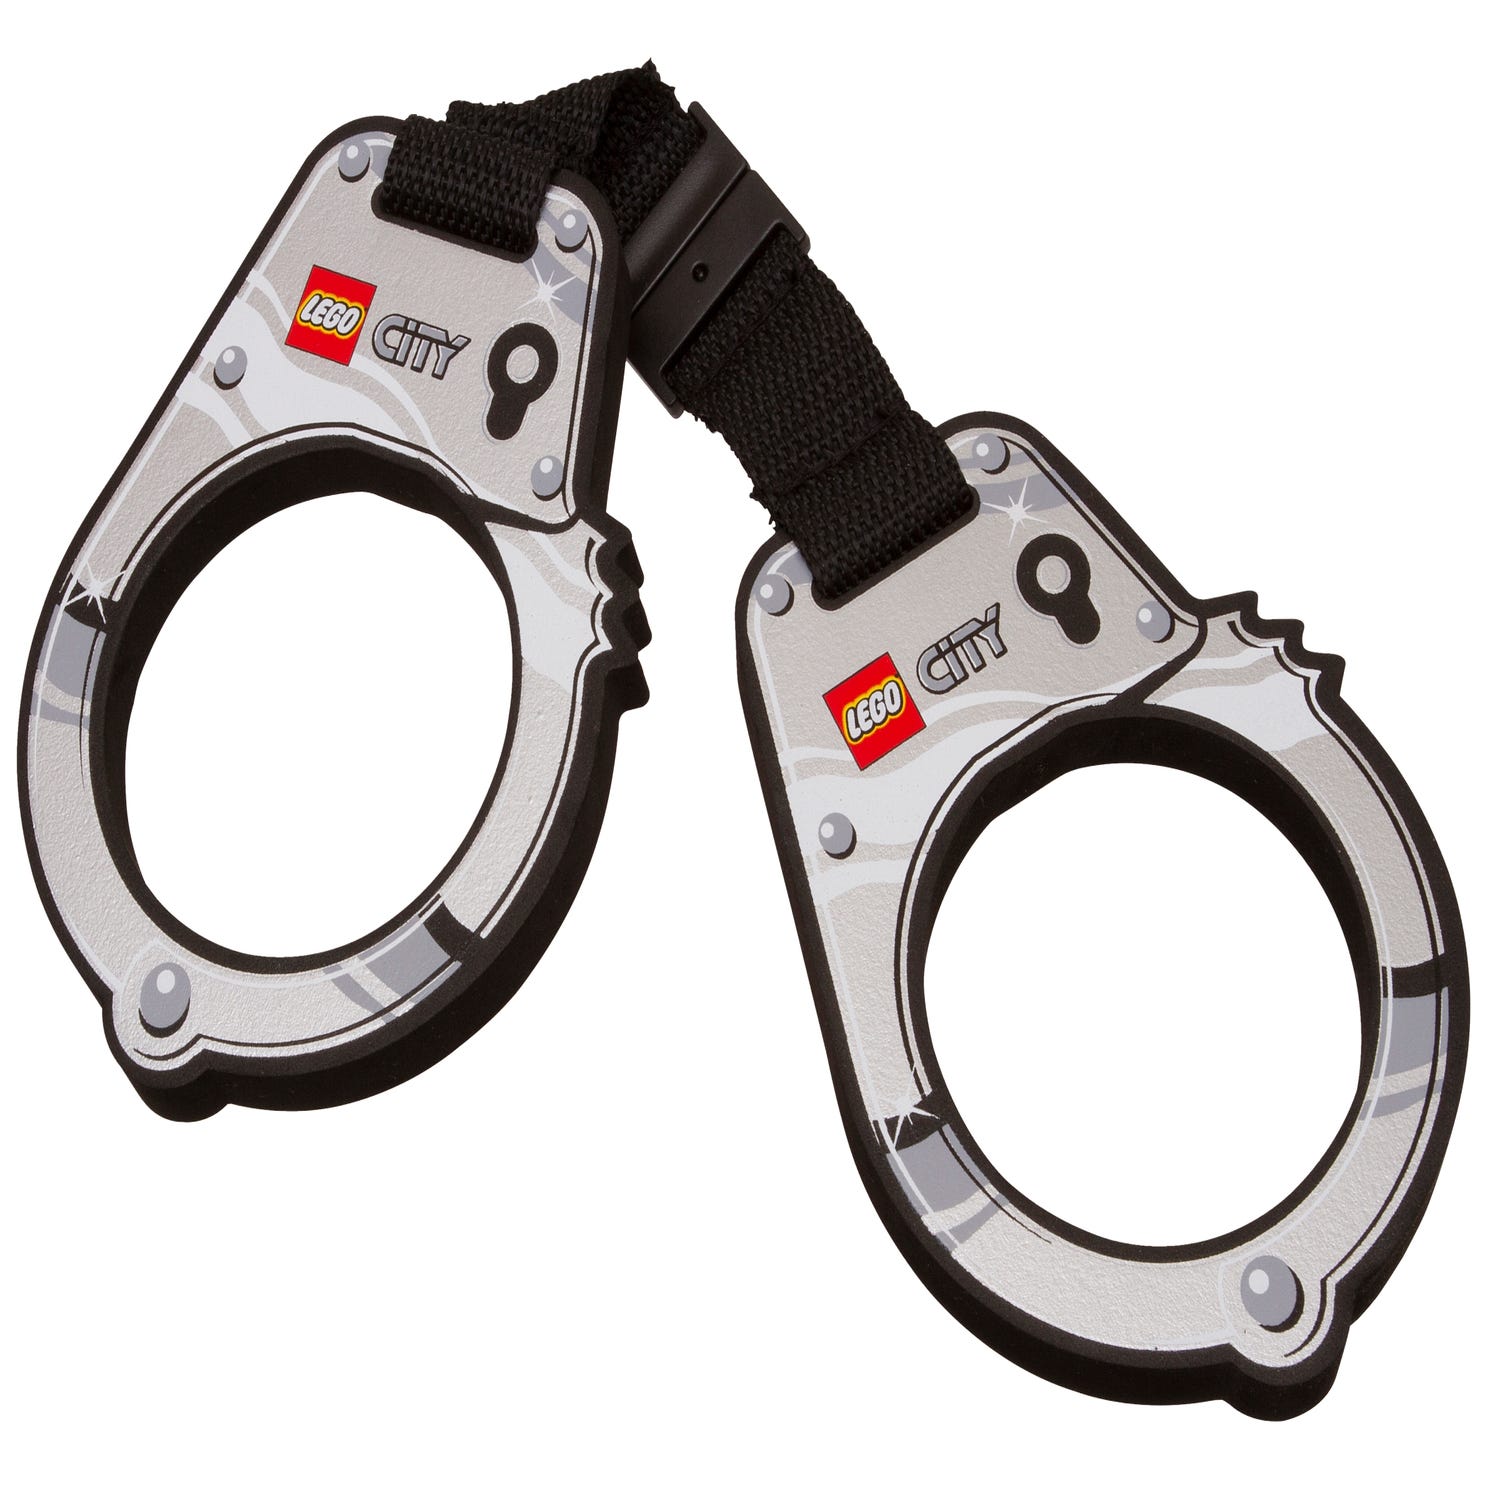 LEGO® City Police Handcuffs